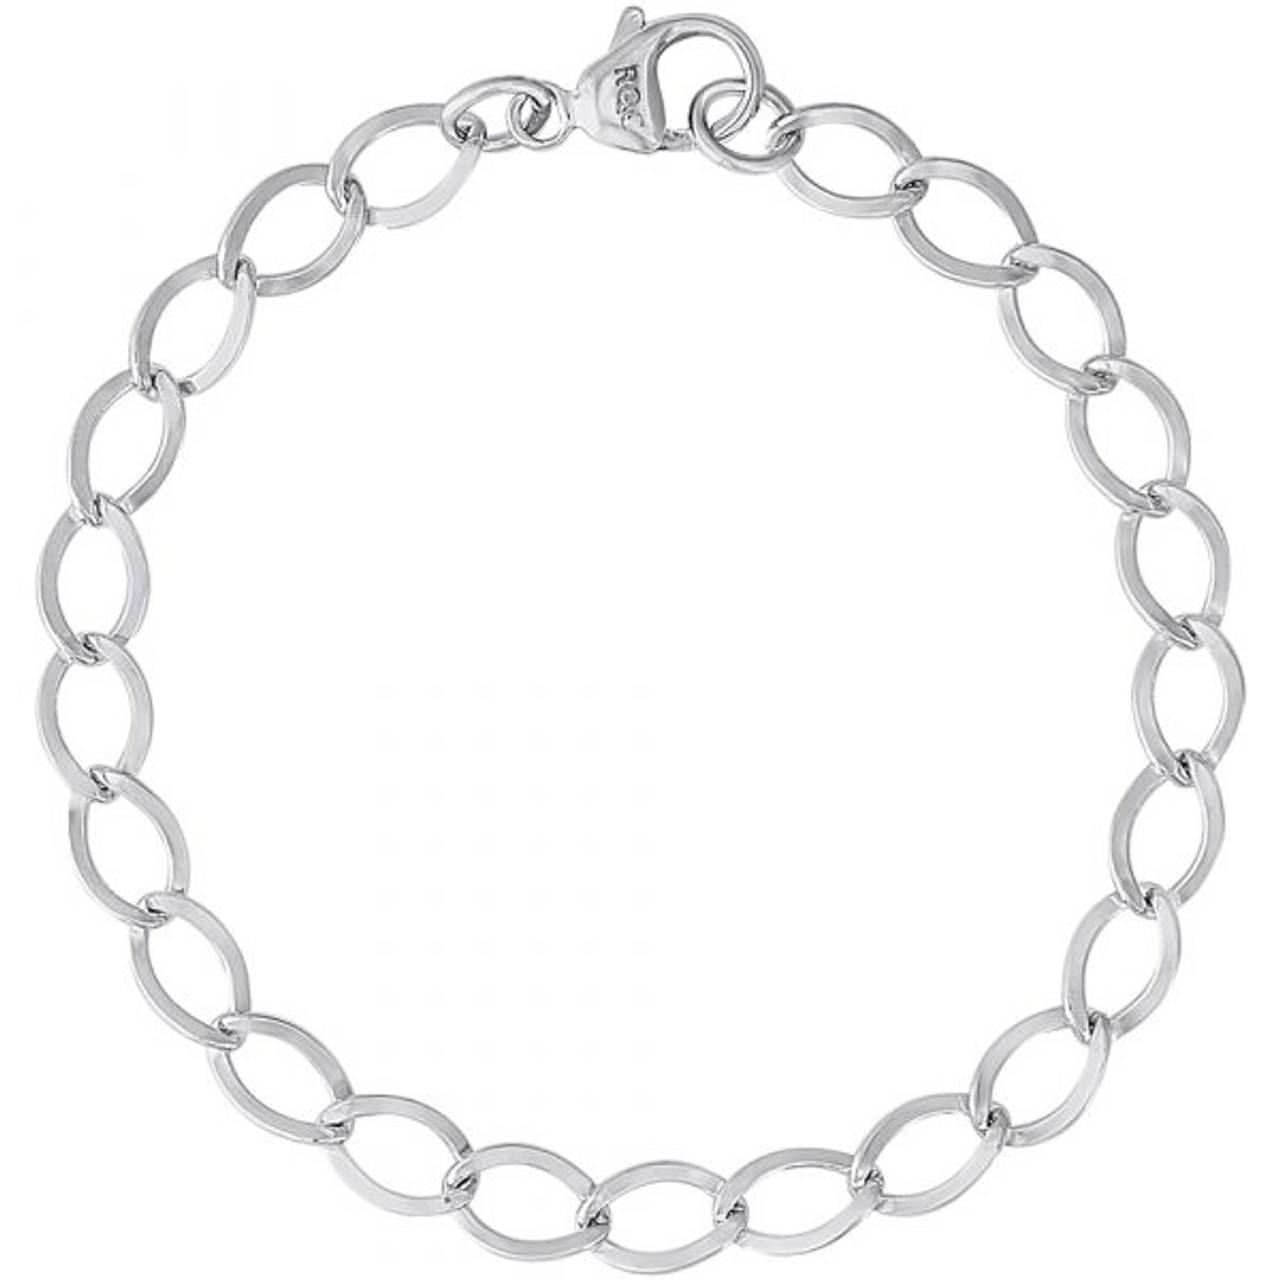 Curb Link Charm Bracelet - 7" or 8" - Sterling Silver or 14k White Gold